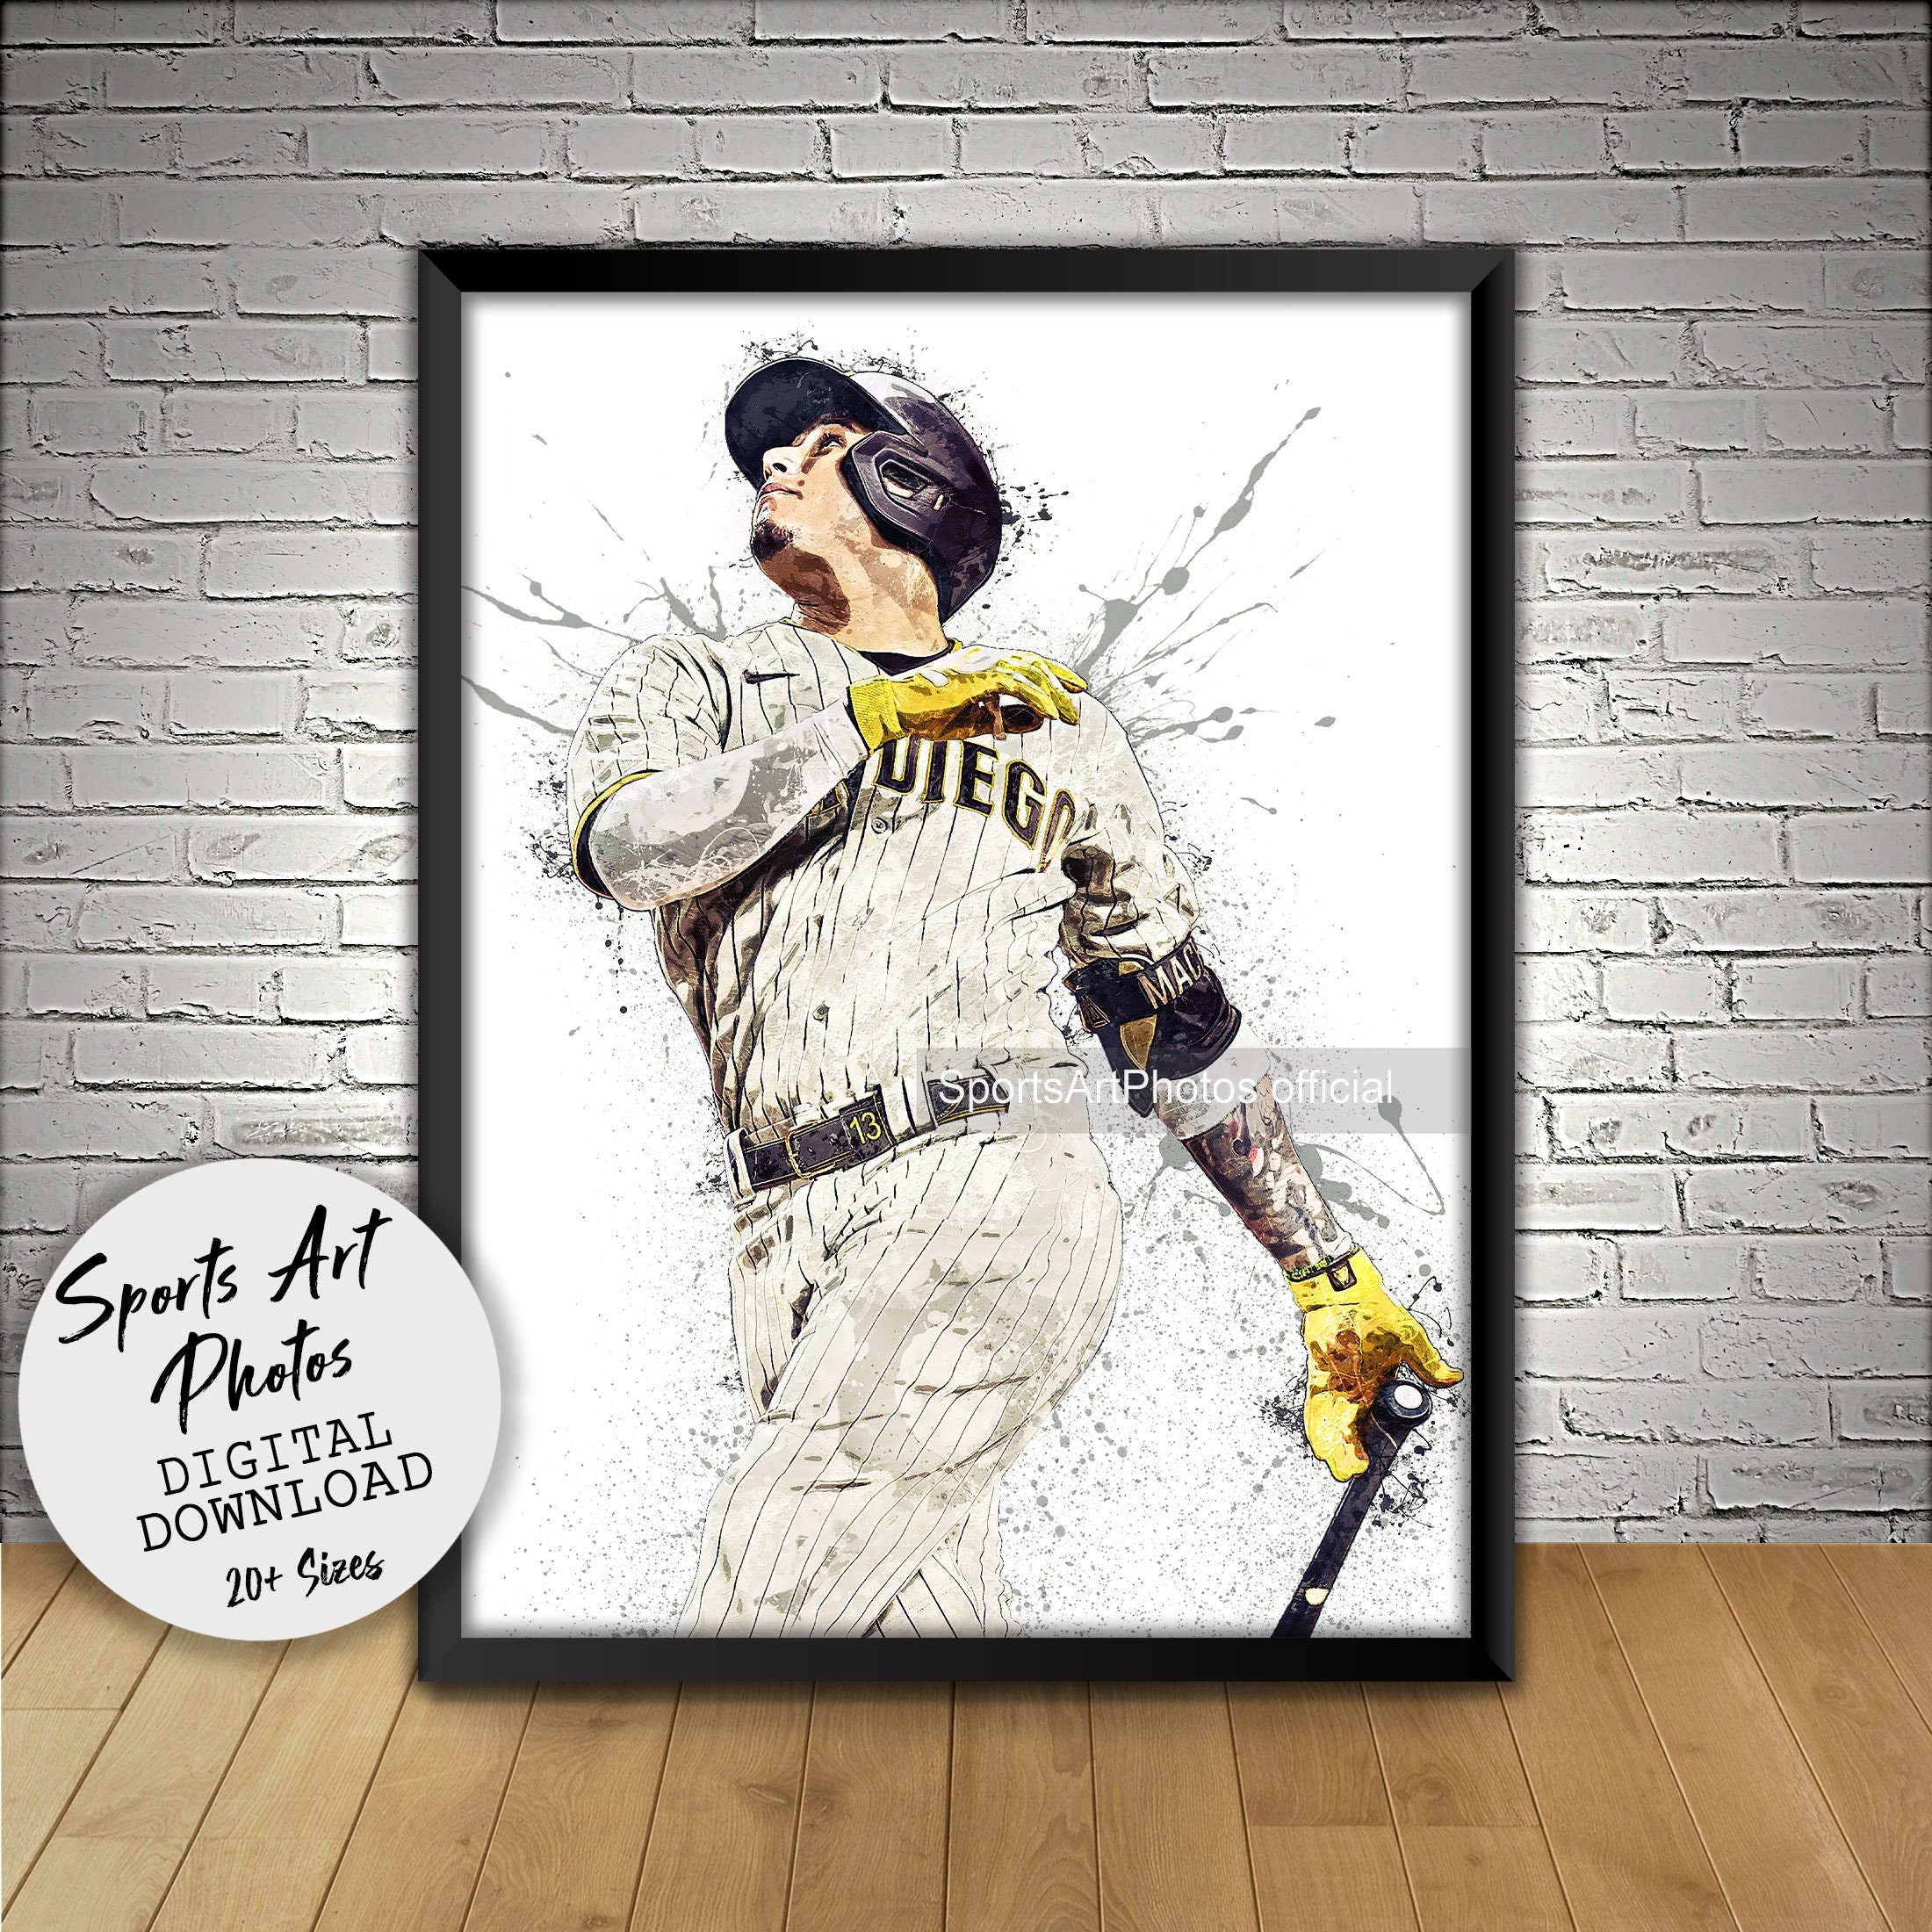 Manny Machado San Diego Padres City Connect MLB Baseball Poster